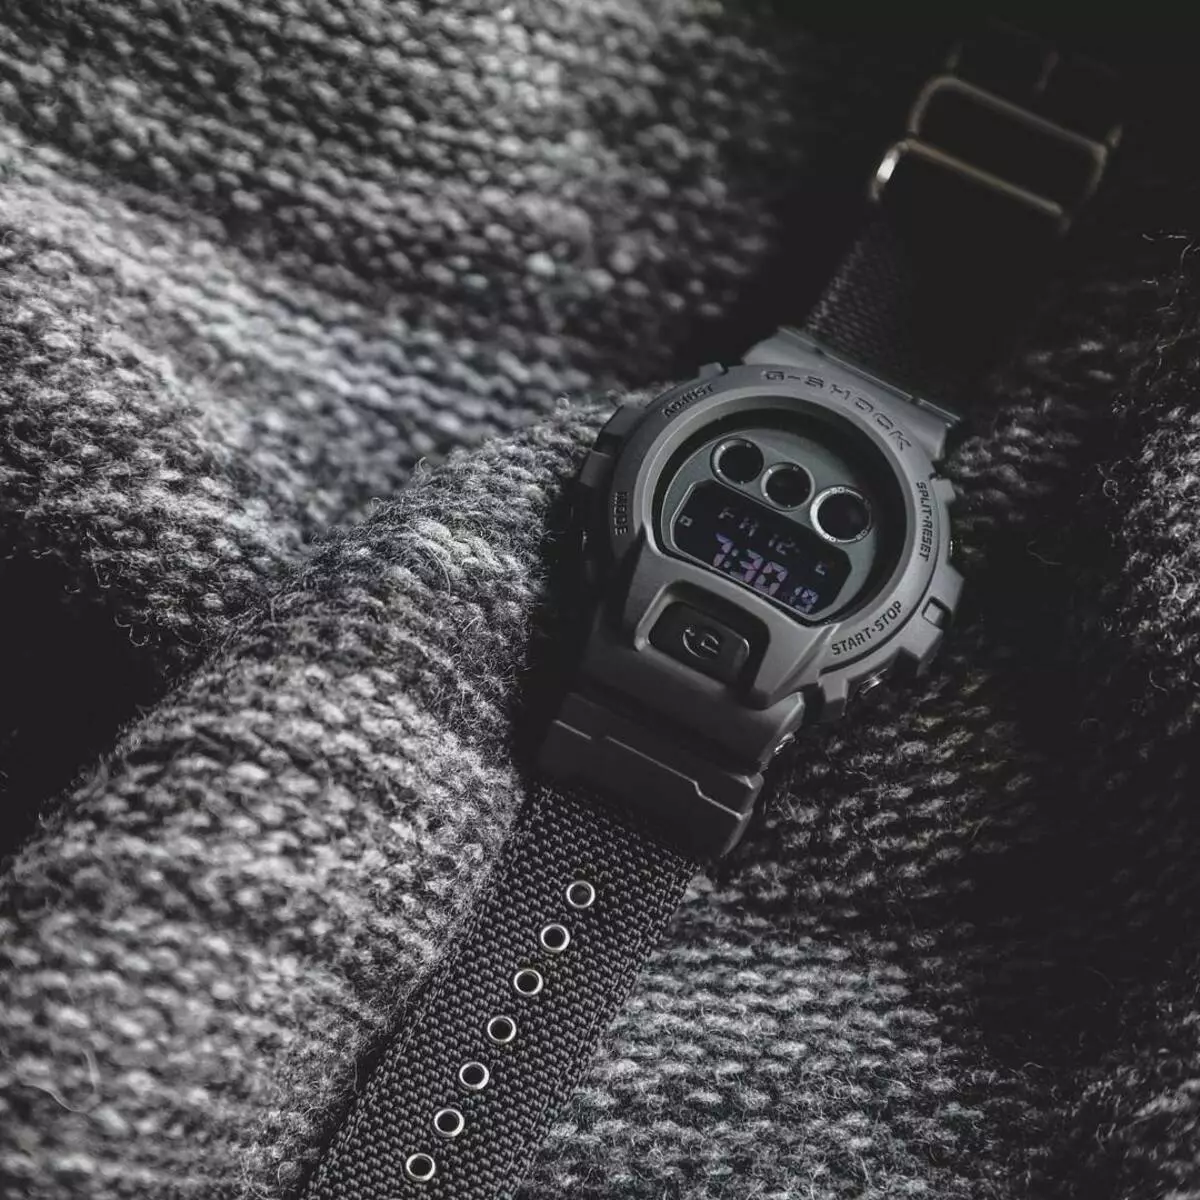 Casio Watches (60 پارچە رەسىم): مېتال بىلەيزنى قانداقتىن قىسقارتىش, ئۇ سائەتكە قانداق ئېلىش, سائەتكە قانداق ئېلىش, ئەسلىدىن قانداق پەرقلەندۈرۈش كېرەك 3040_22